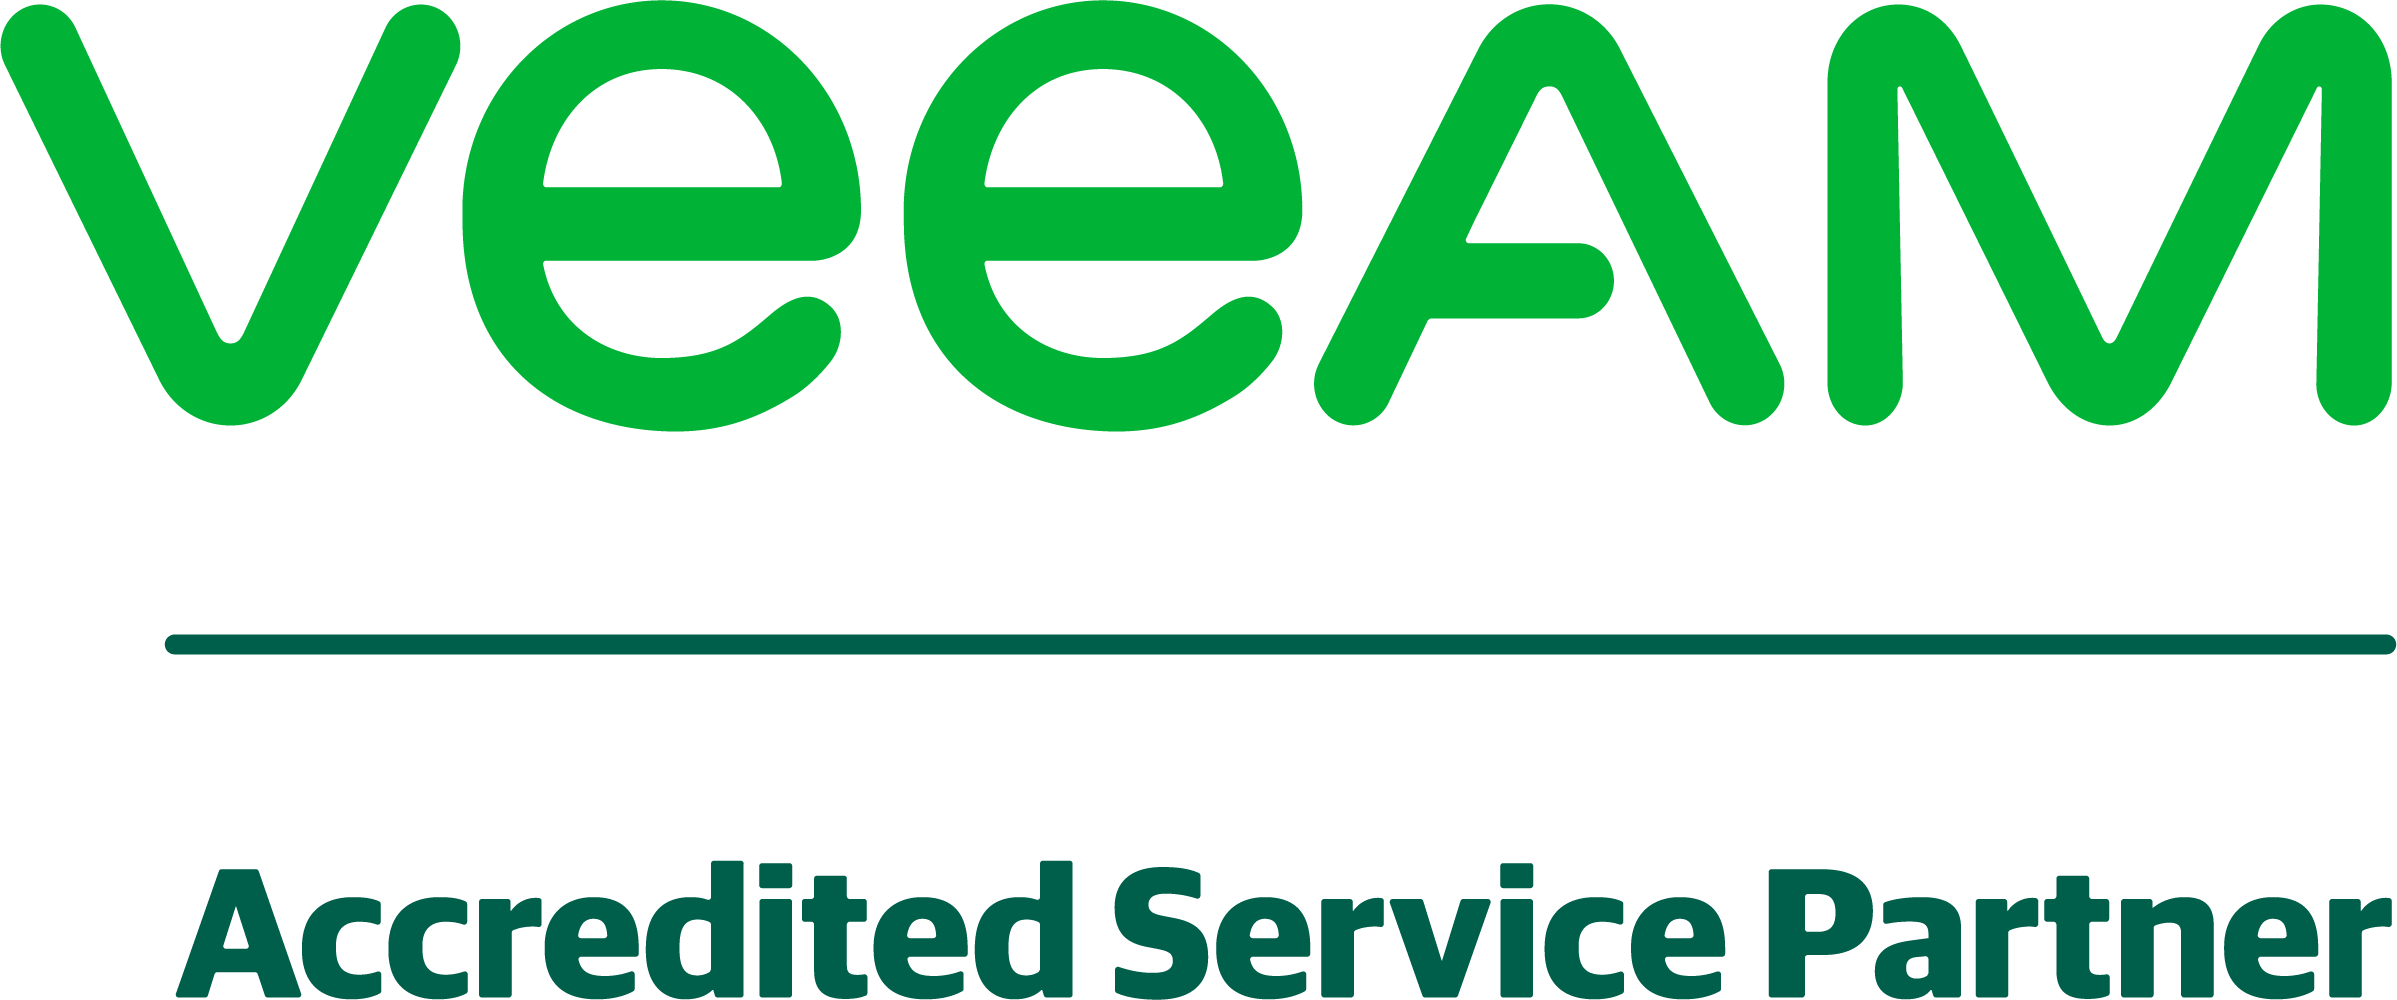 Logo Veeam - Accredited Service Partner